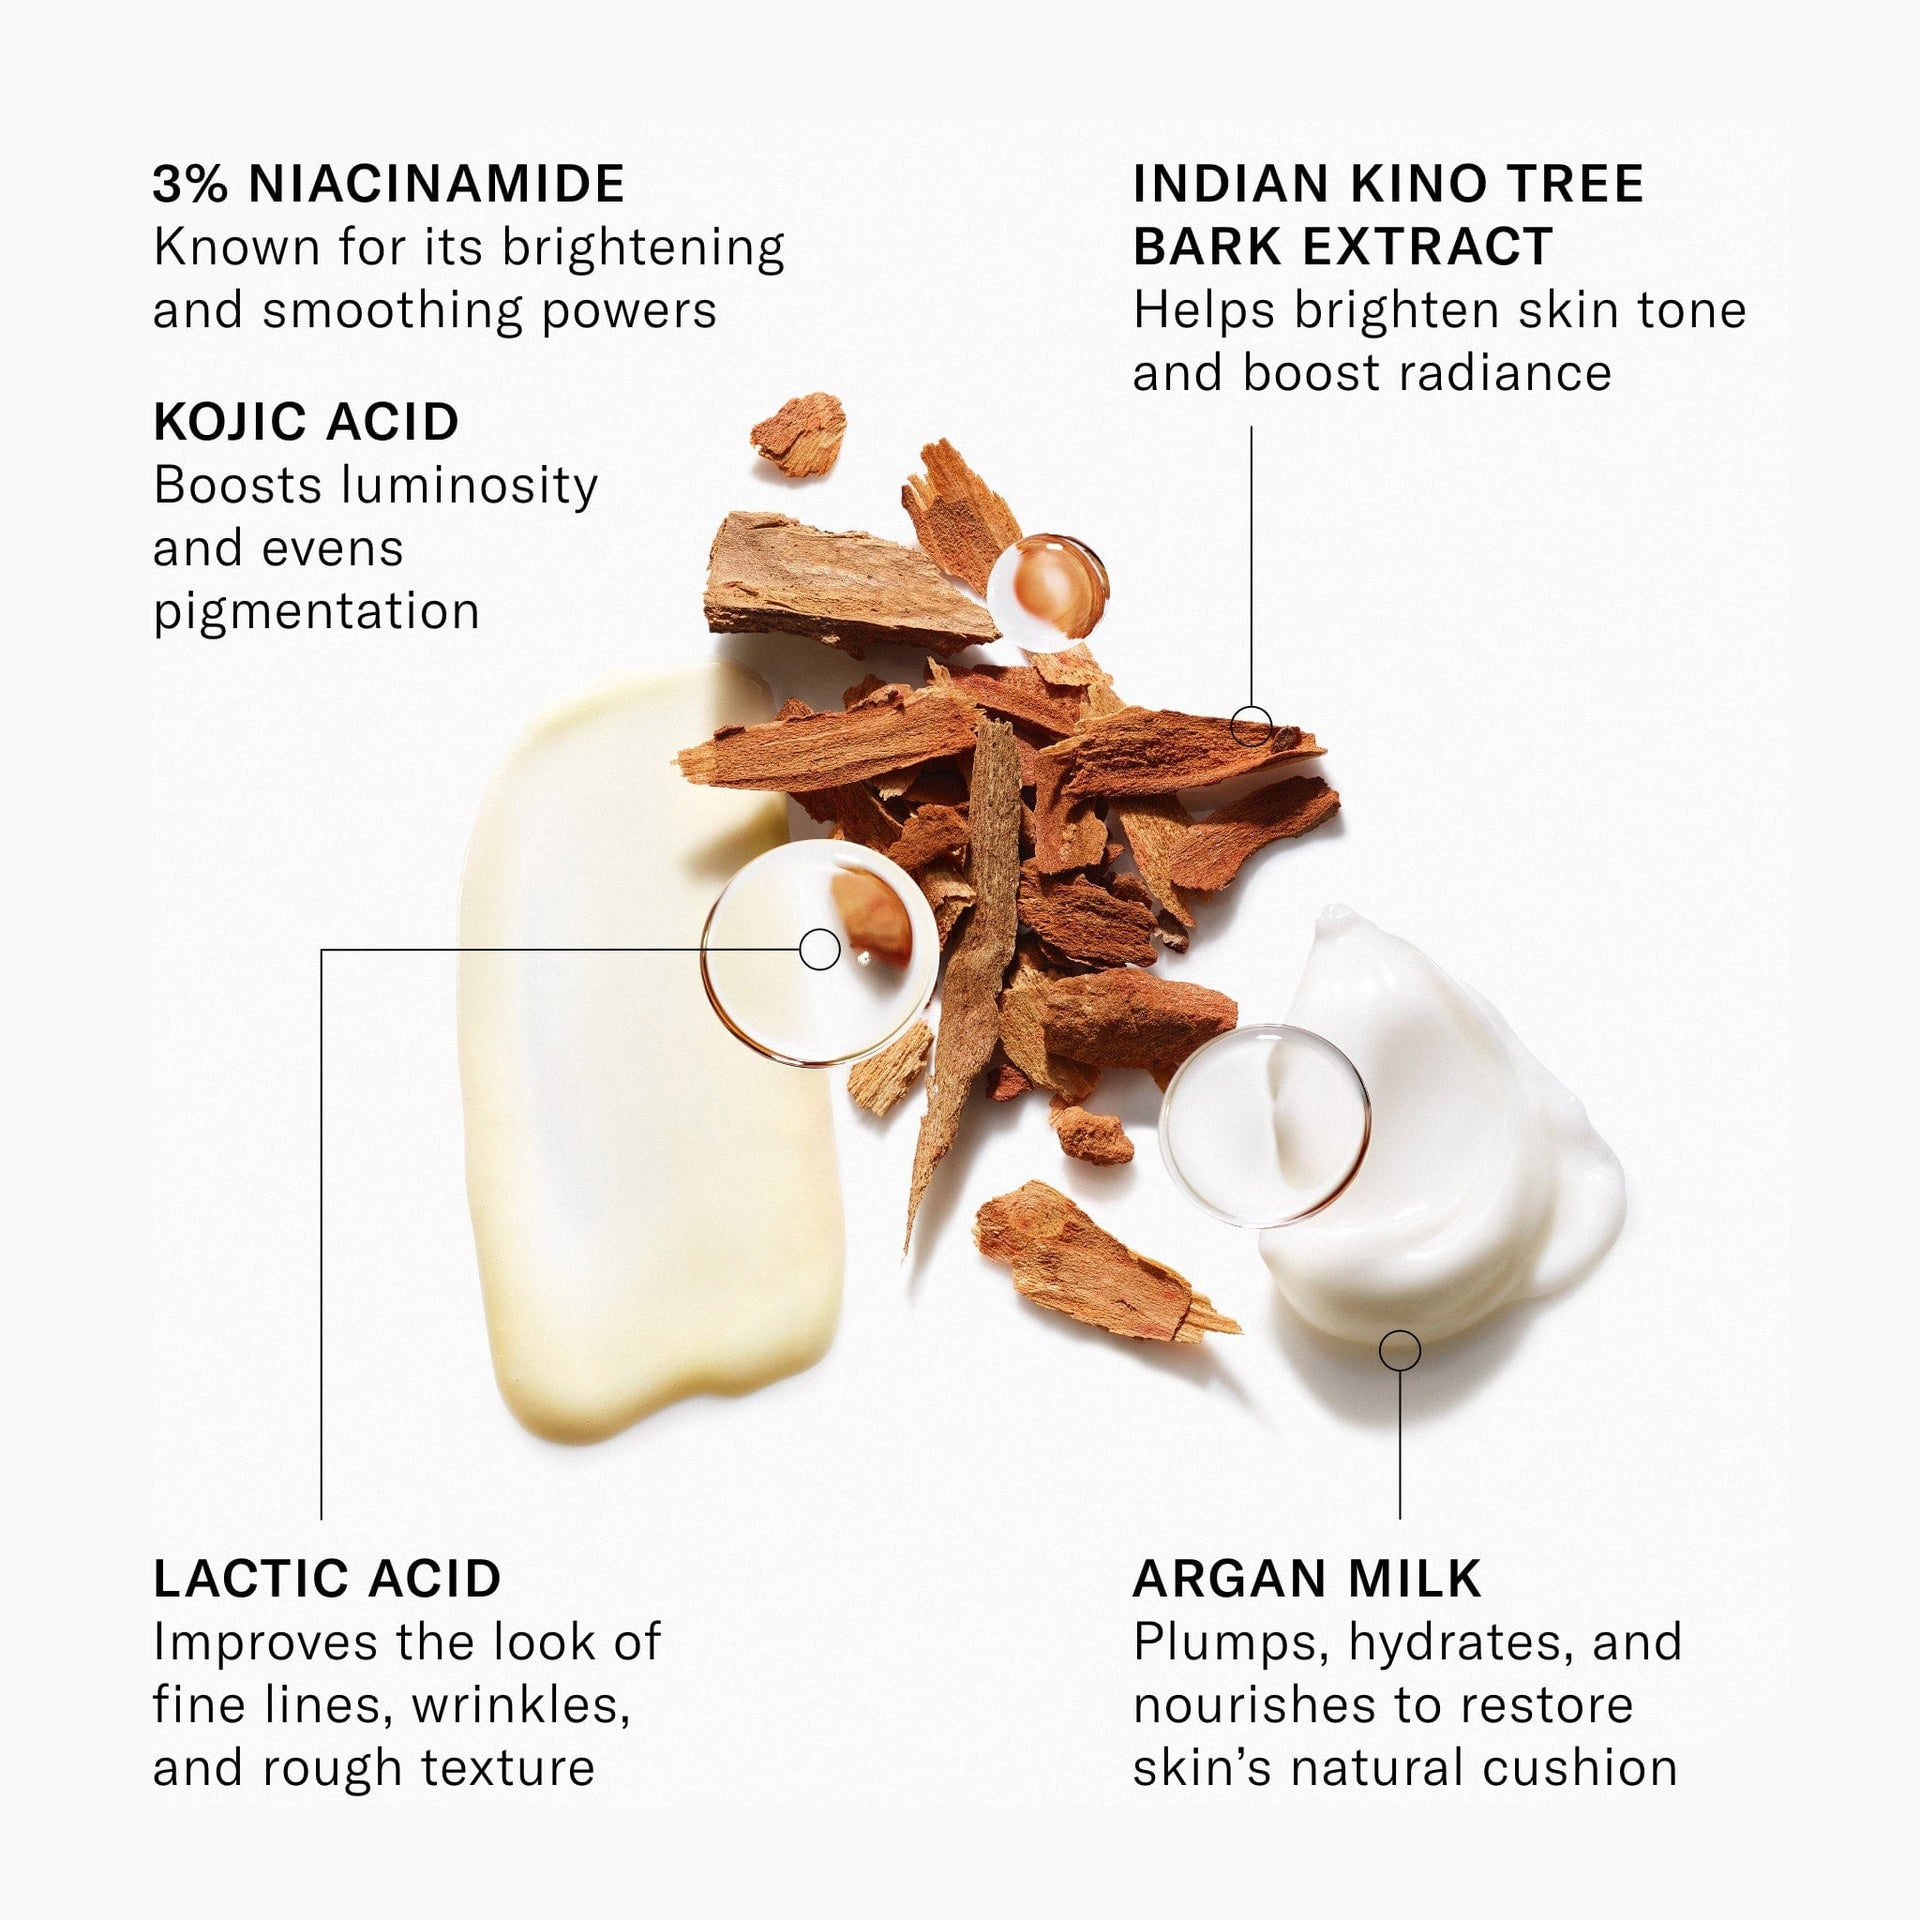 Ingredients. 3% Niacinamide. Kojic Acid. Lactic Acid. Argan Milk. Indian Kino Tree Bark Extract. 